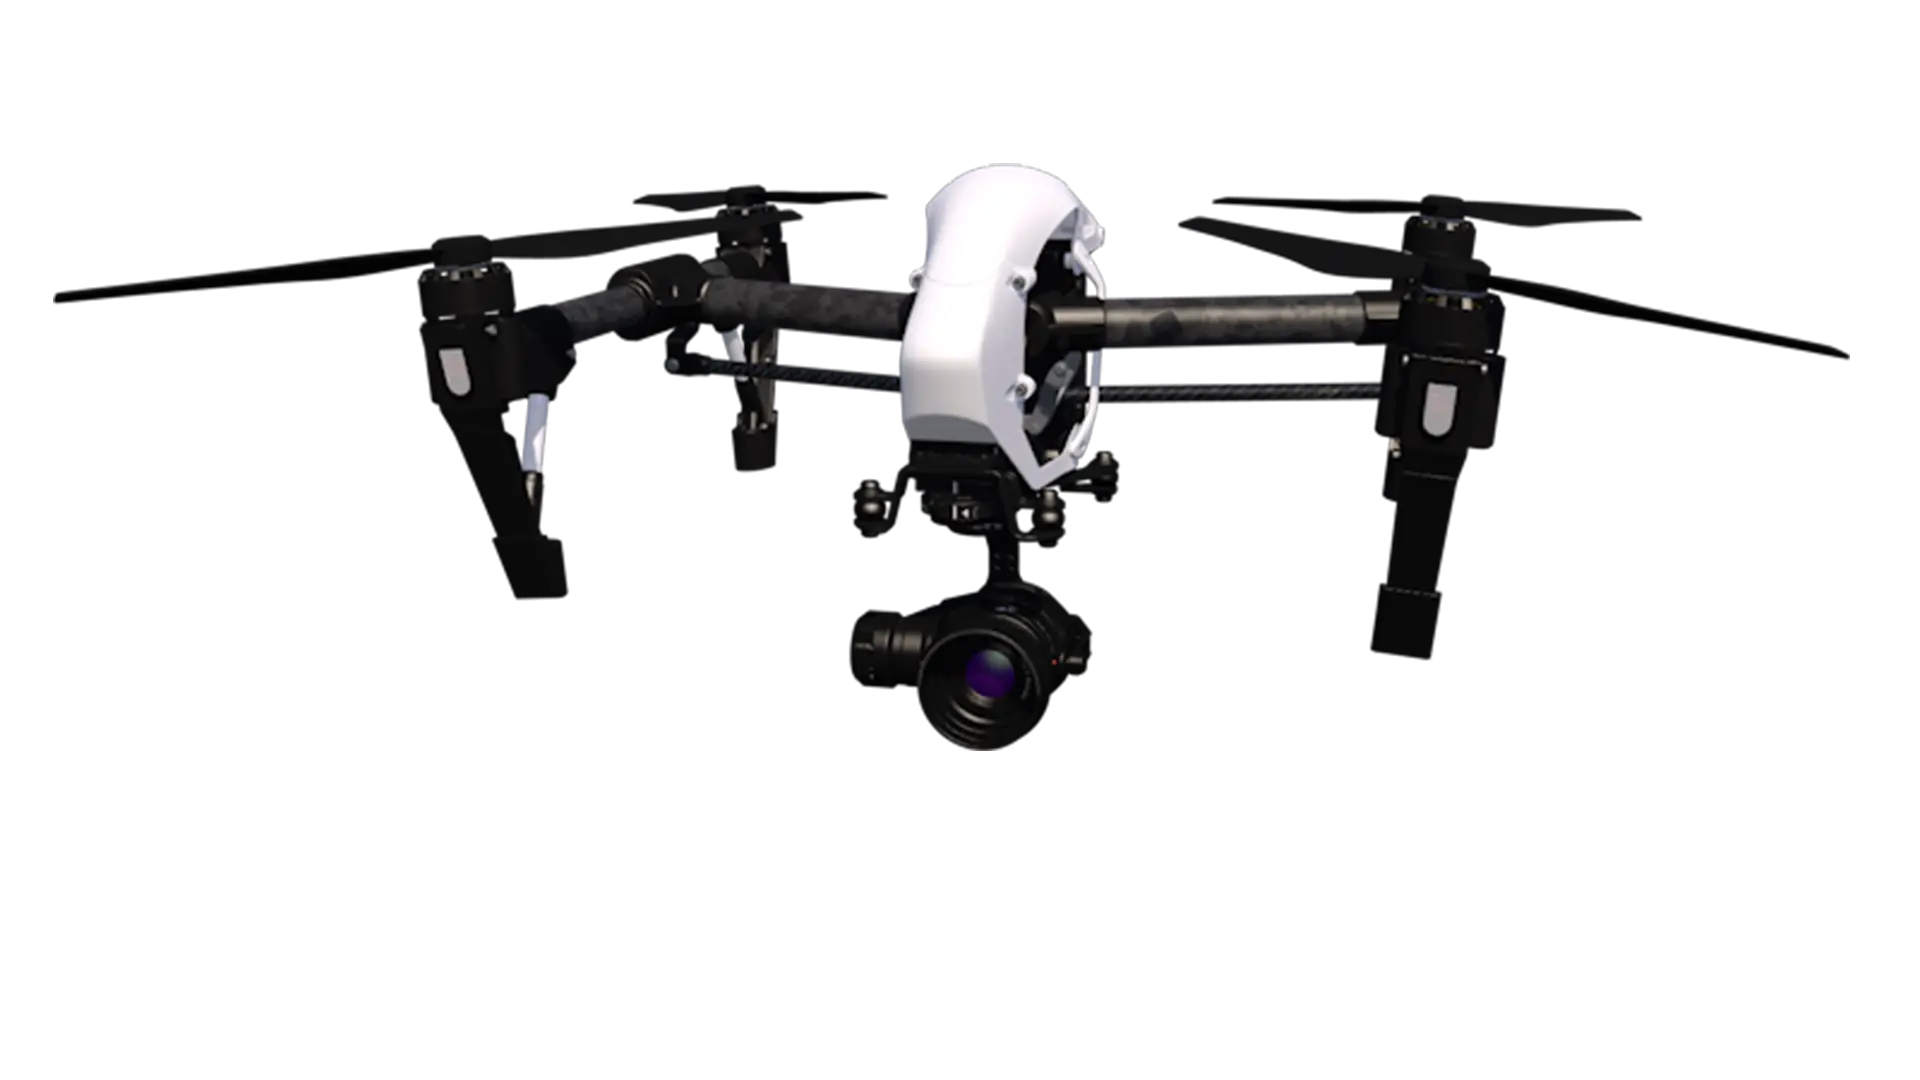 Drone Design and Remote Piloting Degrees – UCNJ